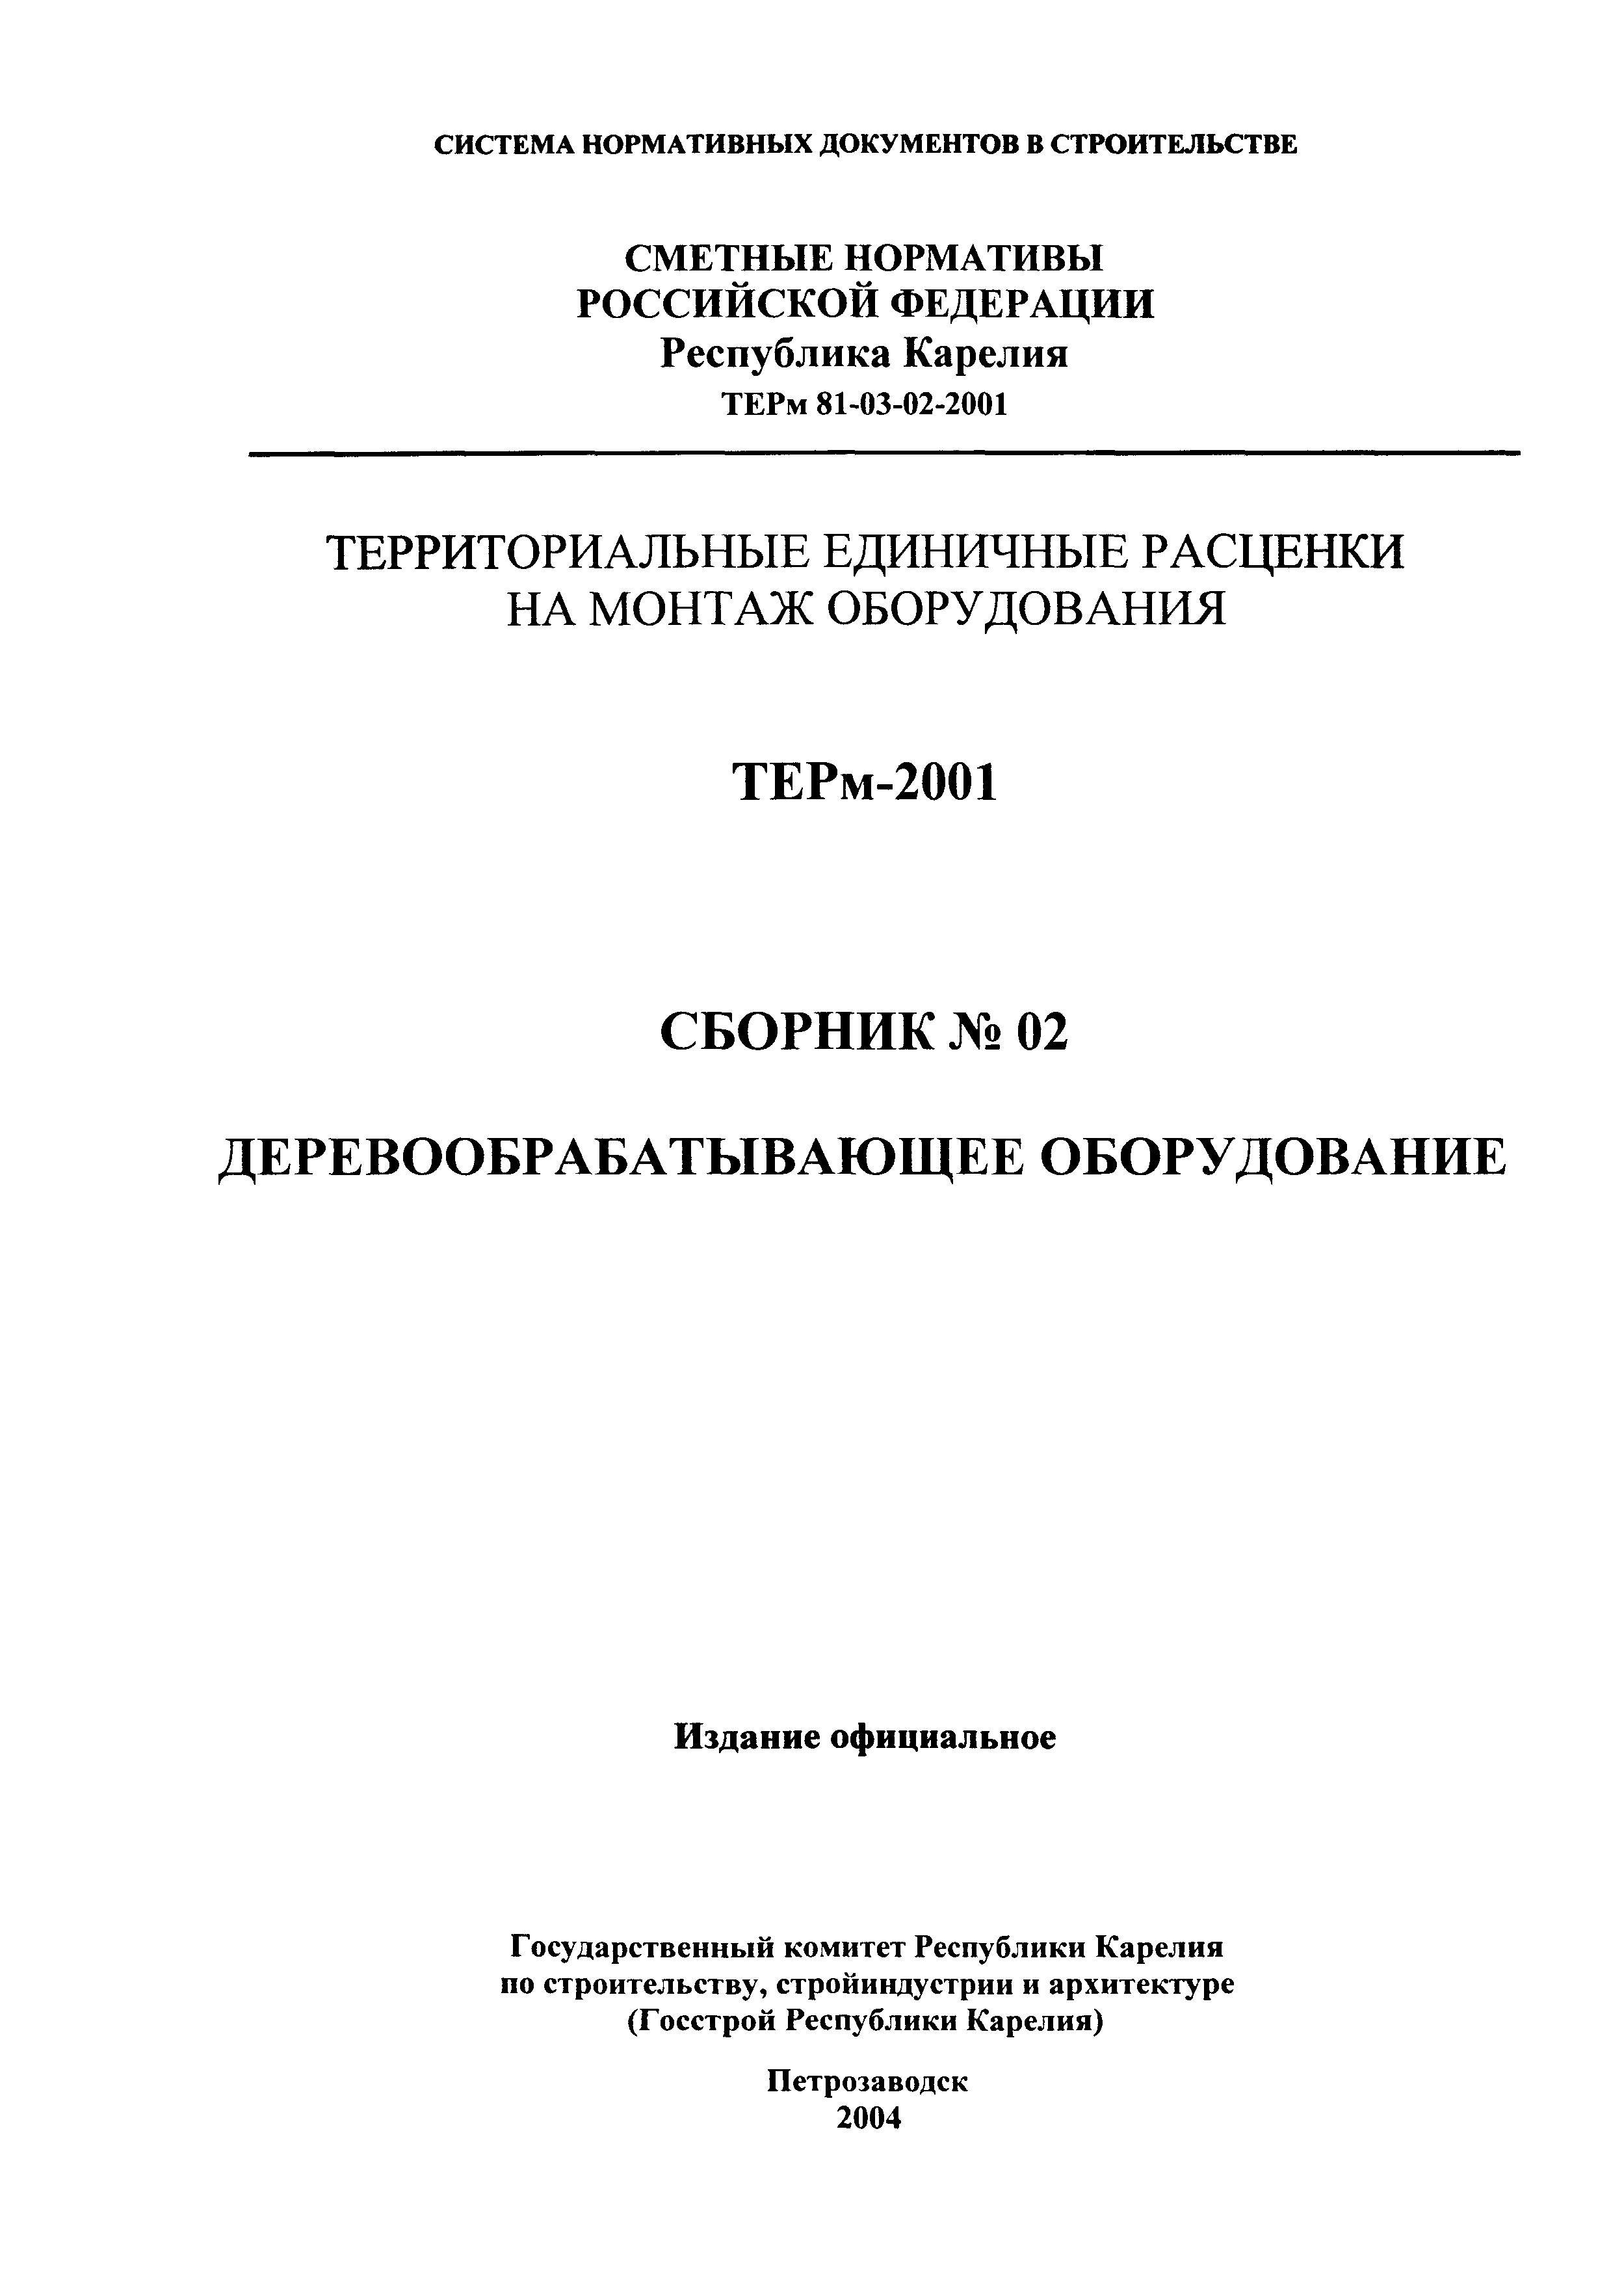 ТЕРм Республика Карелия 2001-02